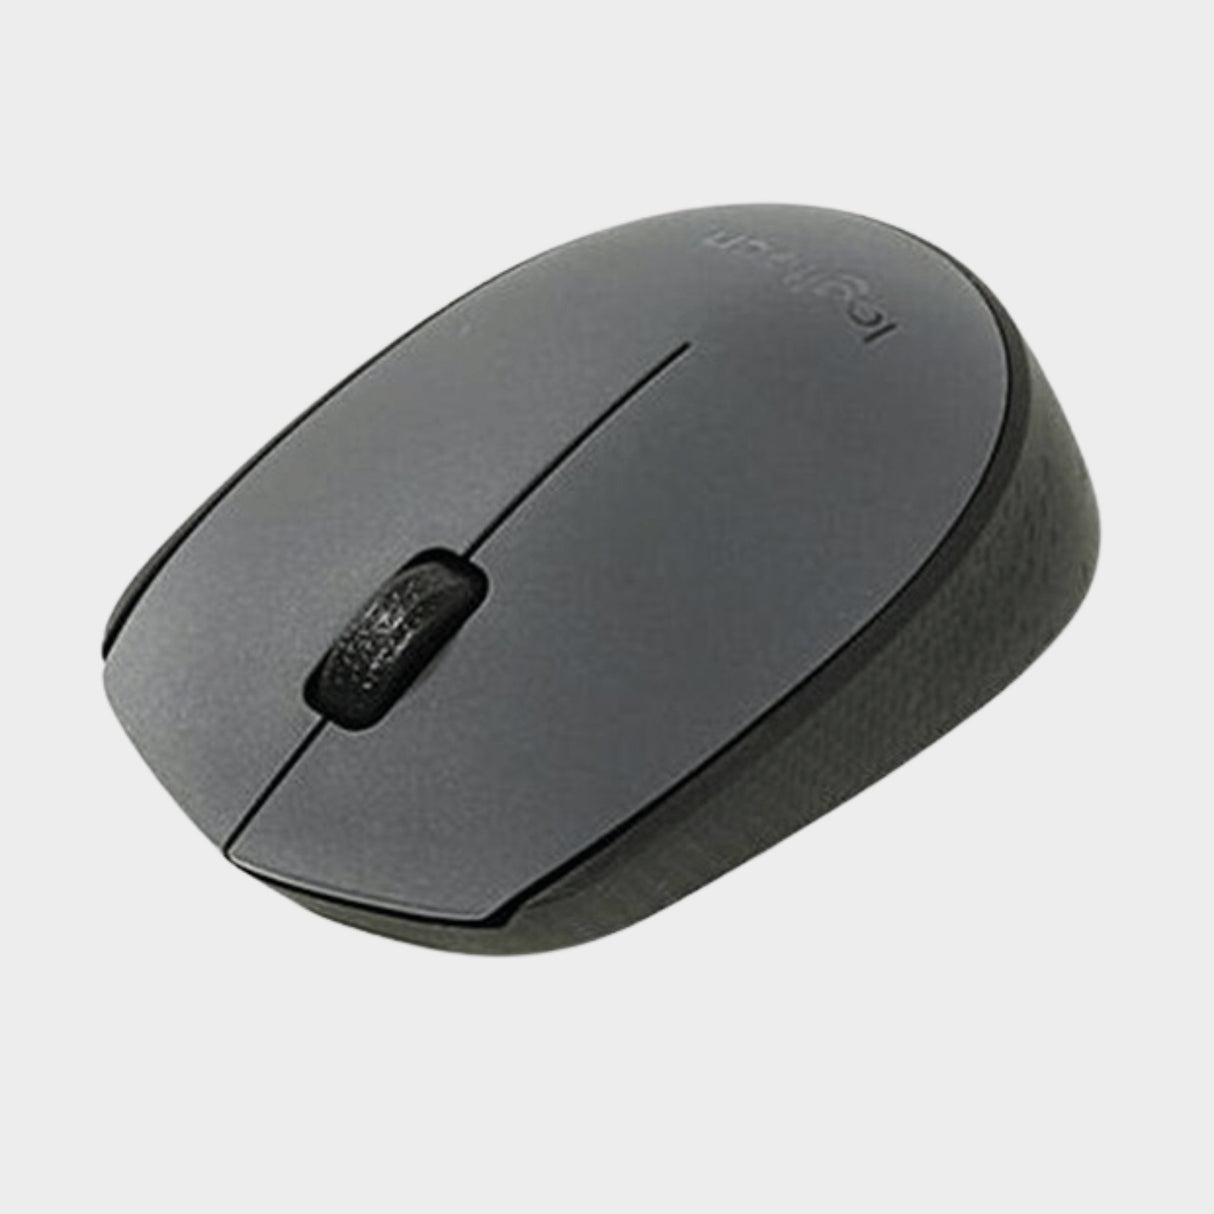 Logitech M170 Wireless Mouse, 2.4 GHz with USB Nano Receiver  - KWT Tech Mart